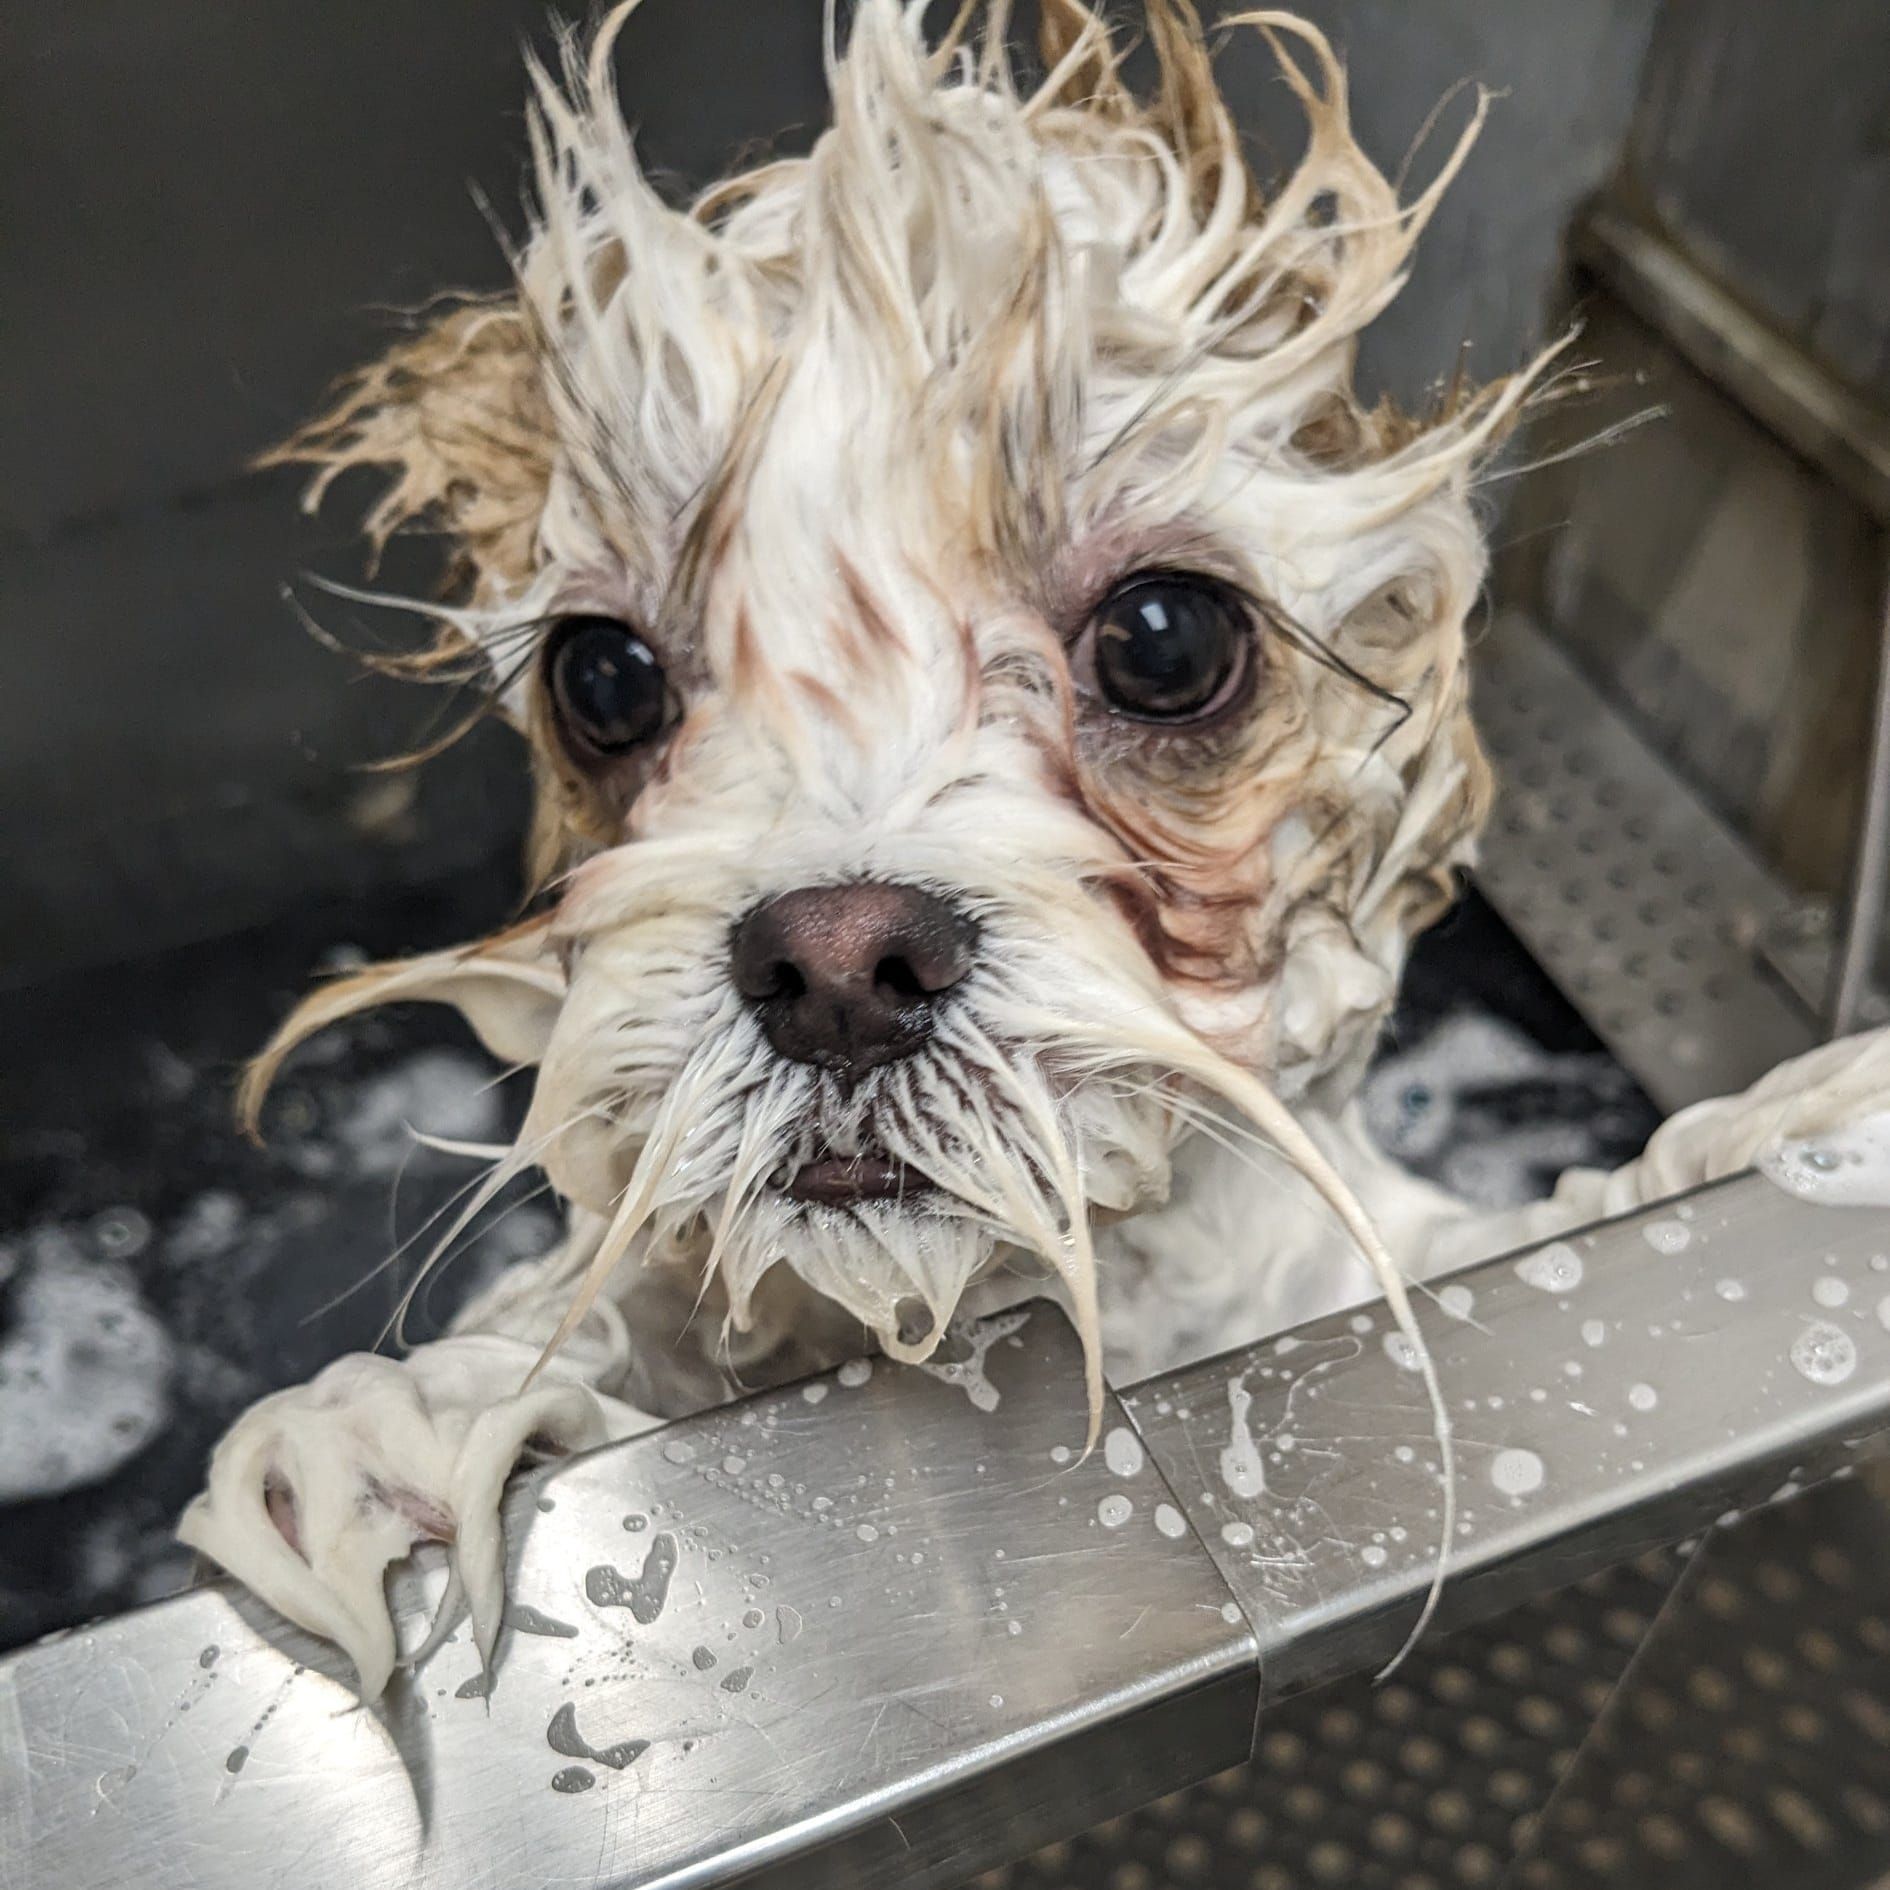 A dog with a beard is taking a bath